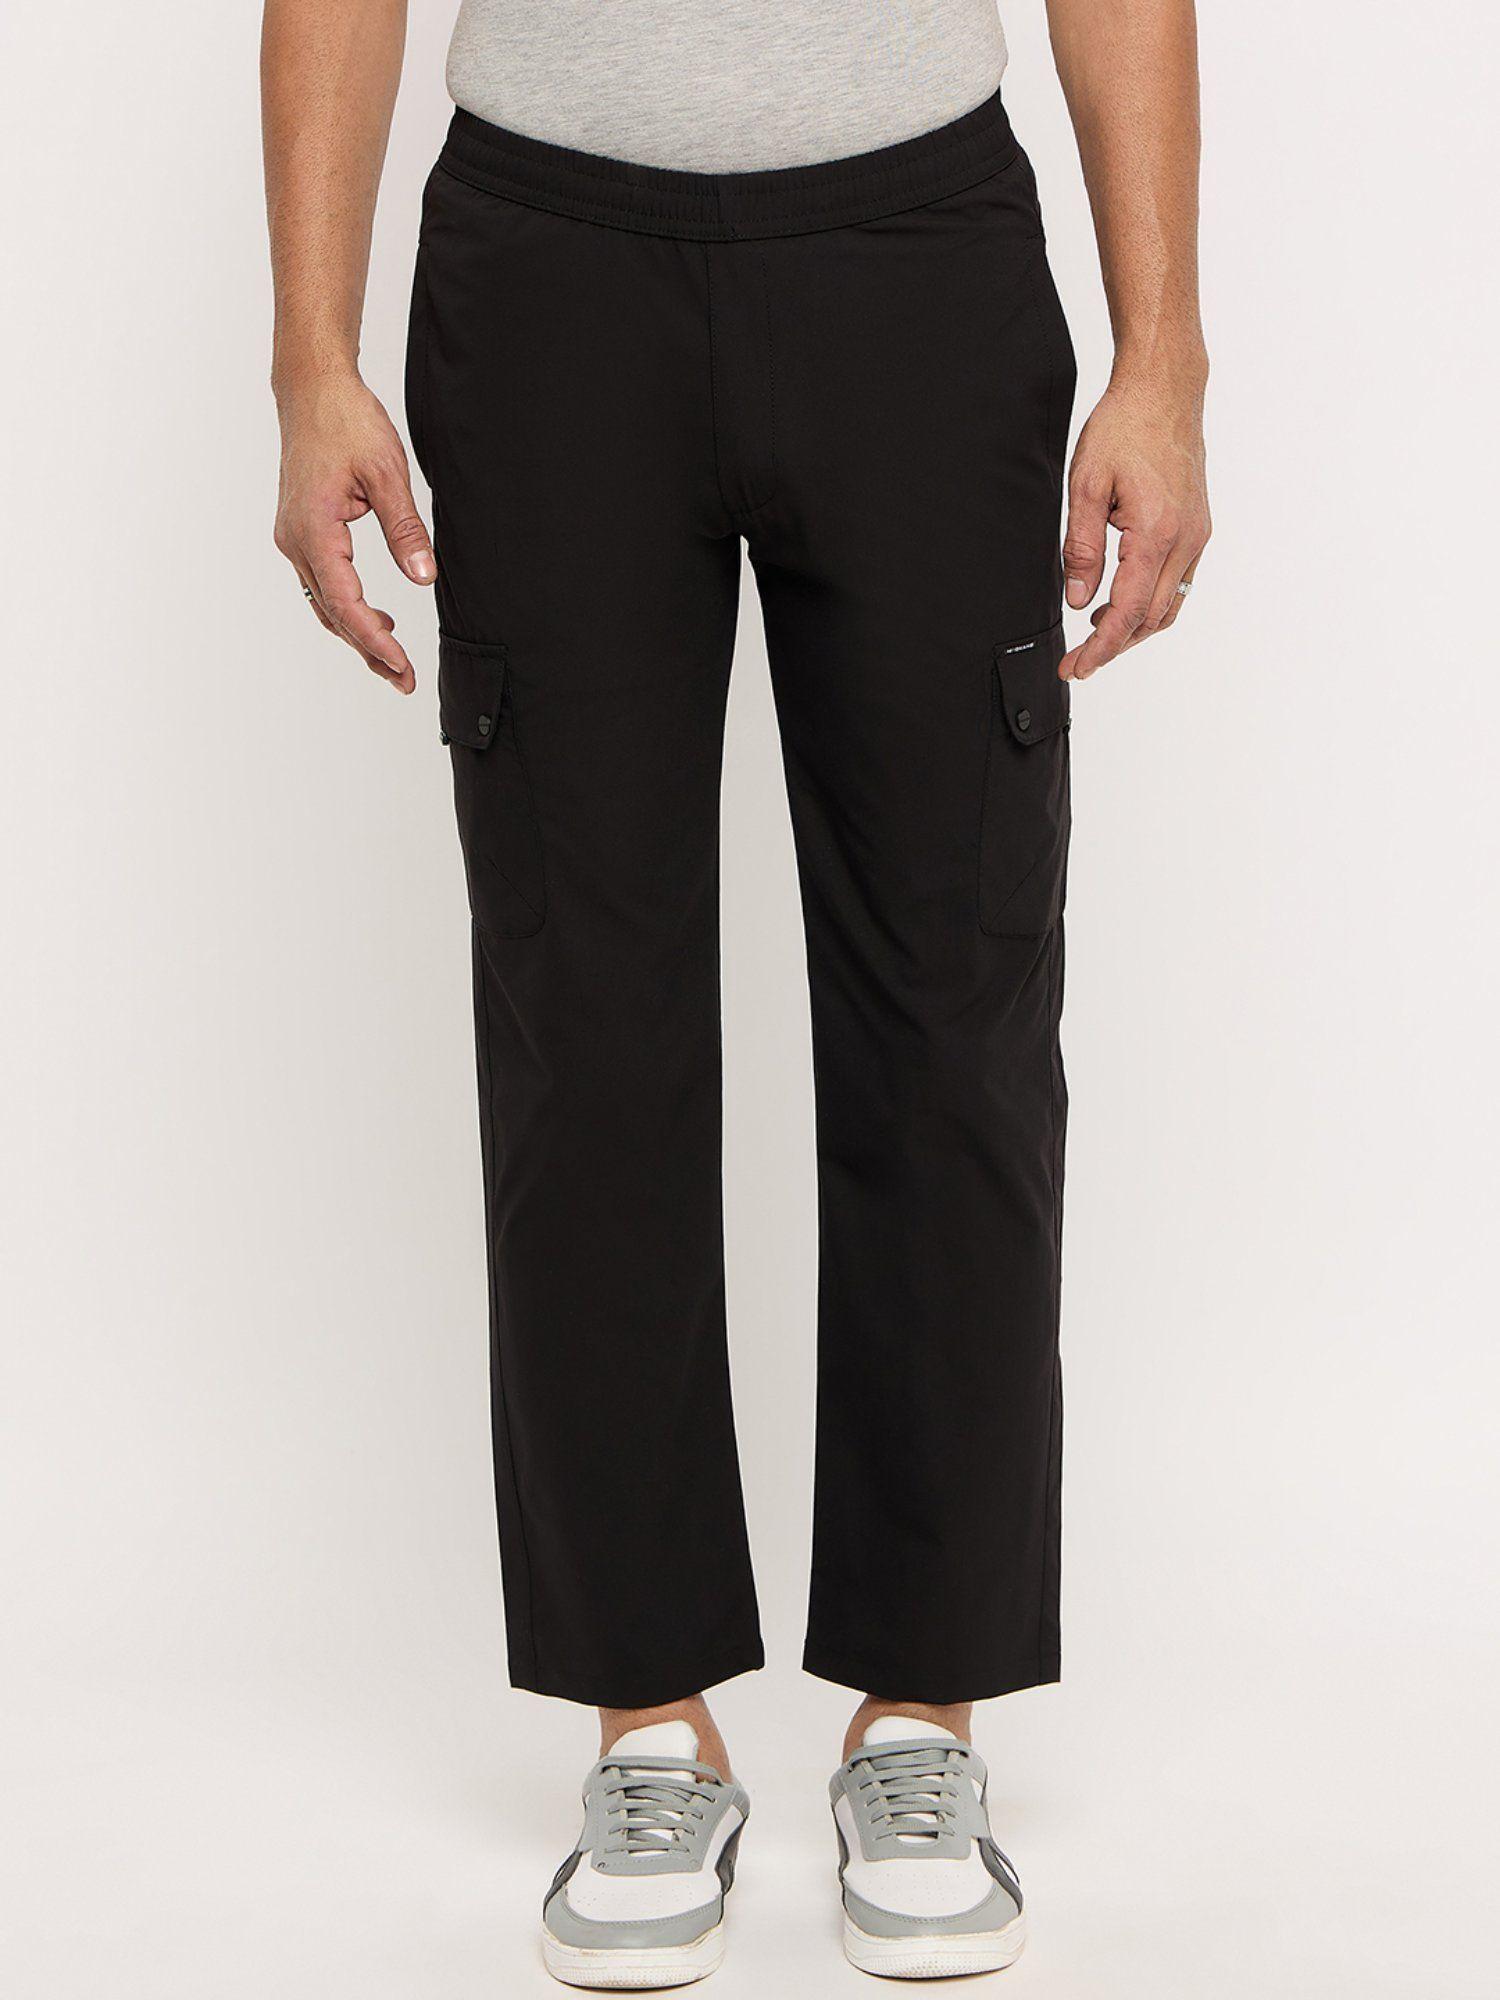 black-polyester-track-pants